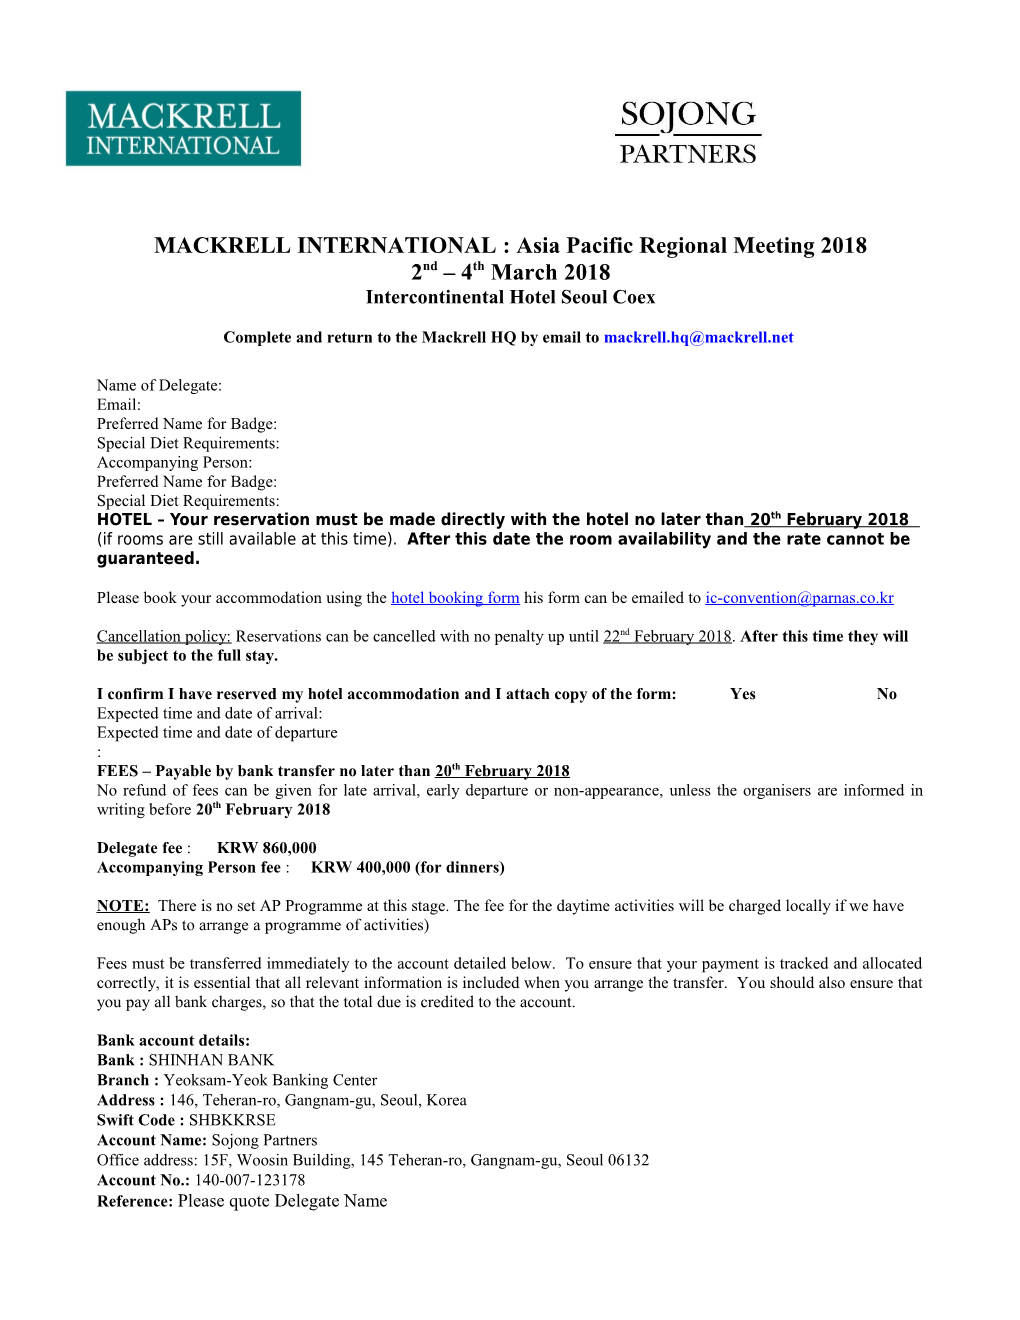 Mackrell International : Annual General Meeting s1